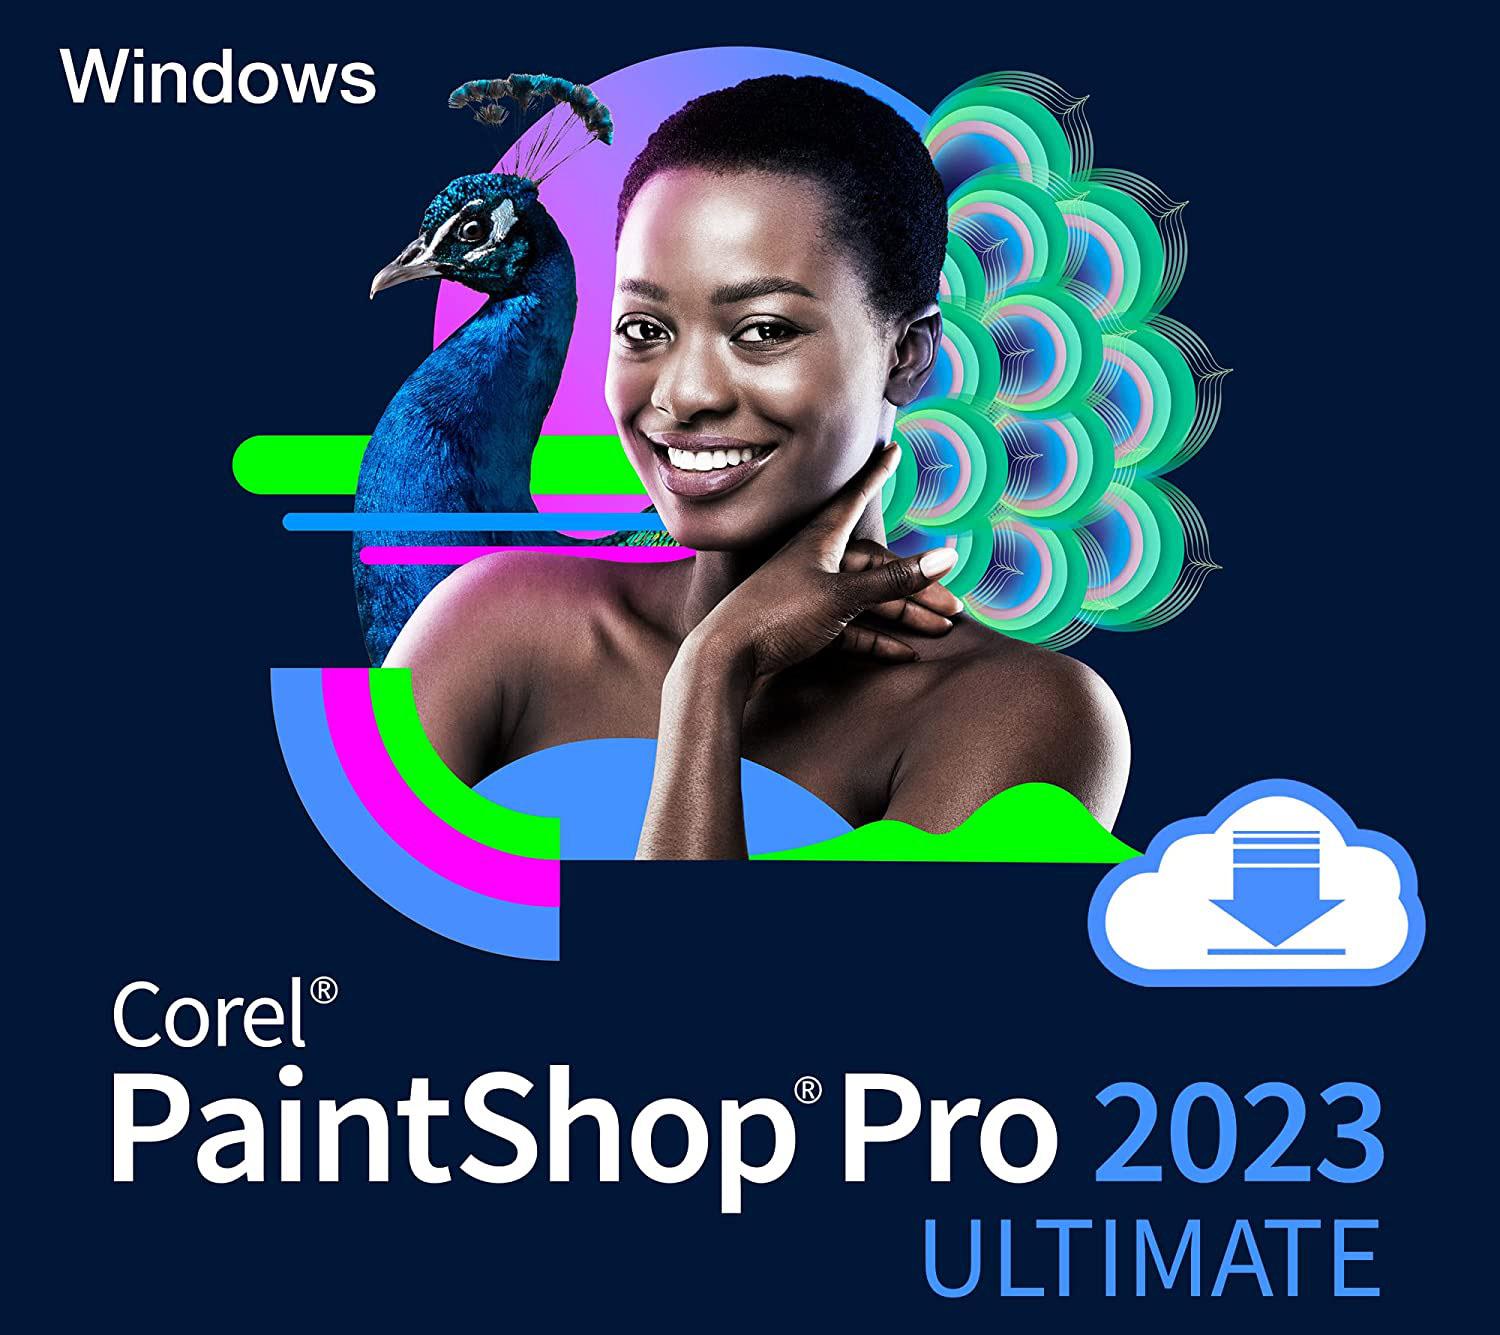 Corel PaintShop Pro 2023 Ultimate Photo Editing PC Software for Free